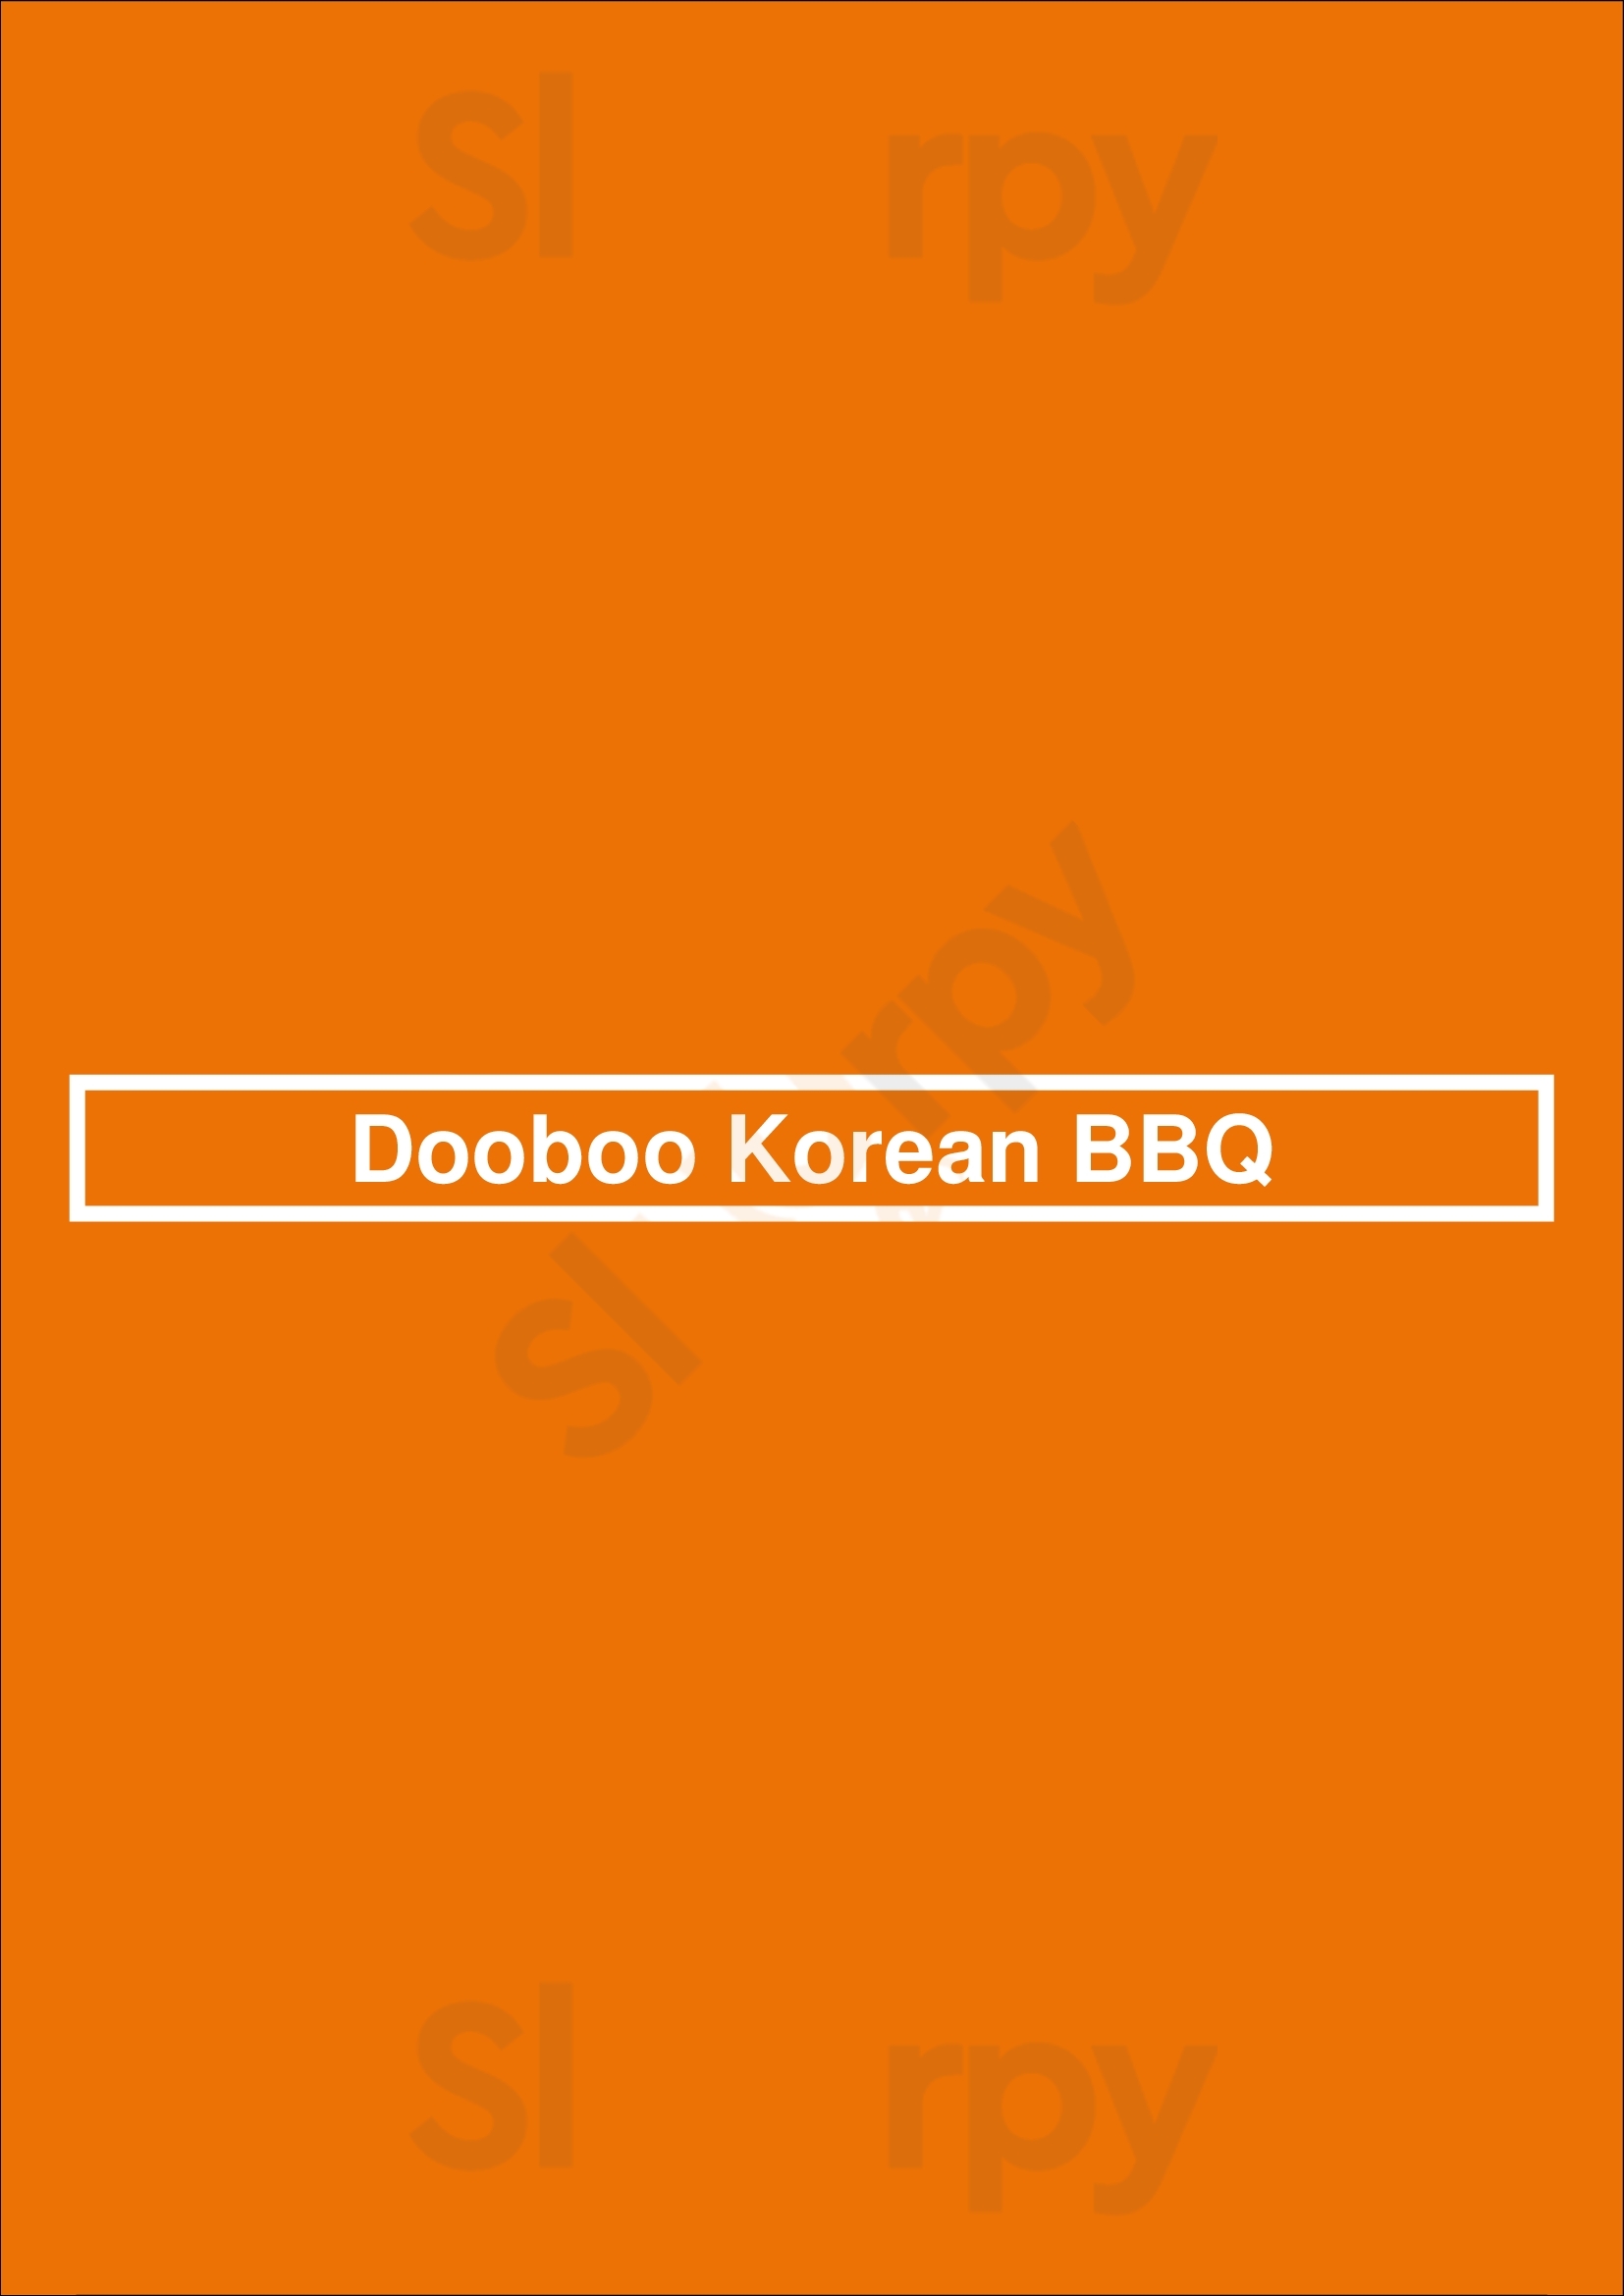 Dooboo Korean Bbq Burnaby Menu - 1